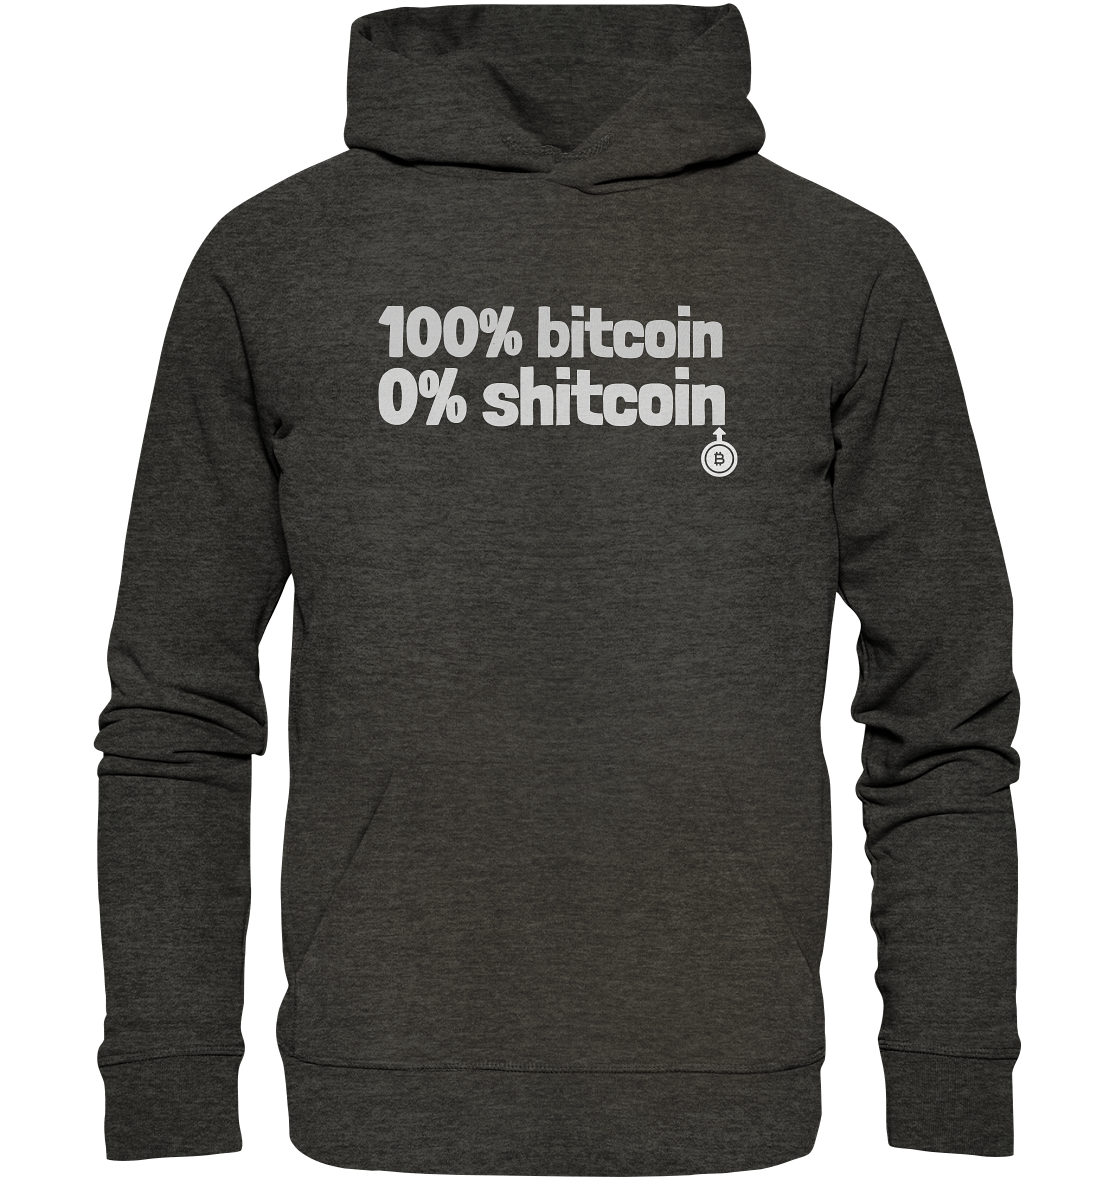 100% bitcoin - 0% shitcoin  - Organic Hoodie